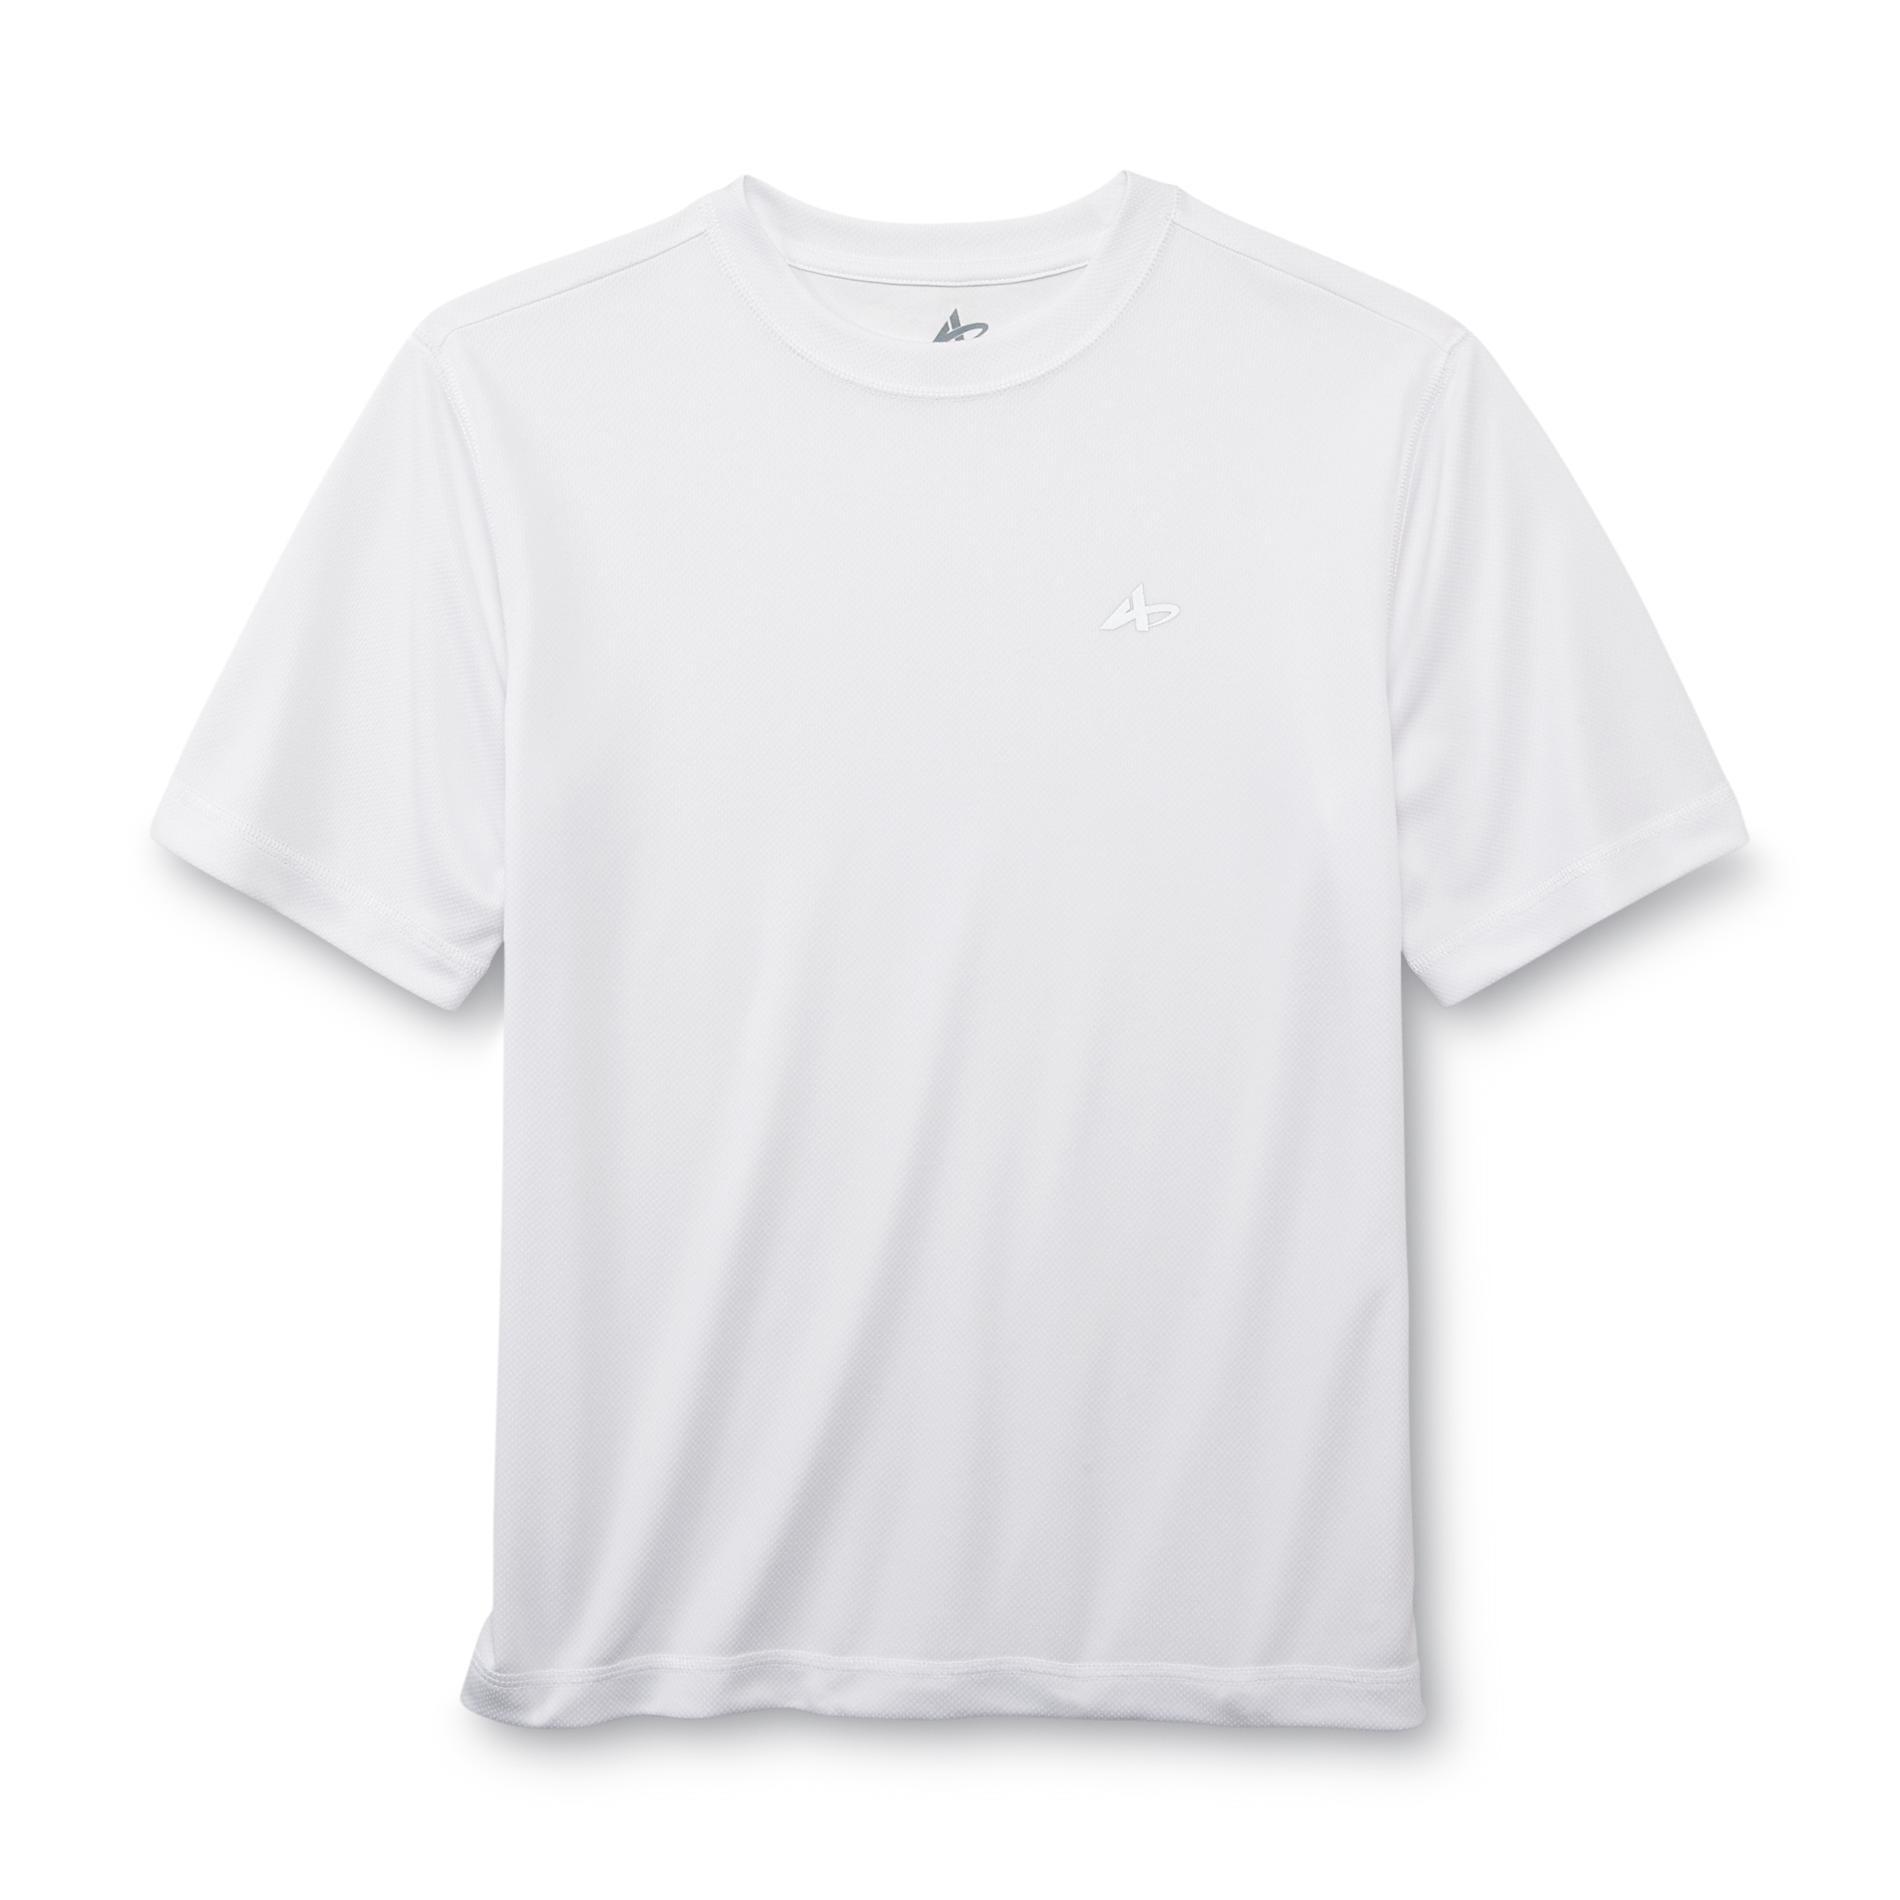 Athletech Boy's Mesh Athletic T-Shirt